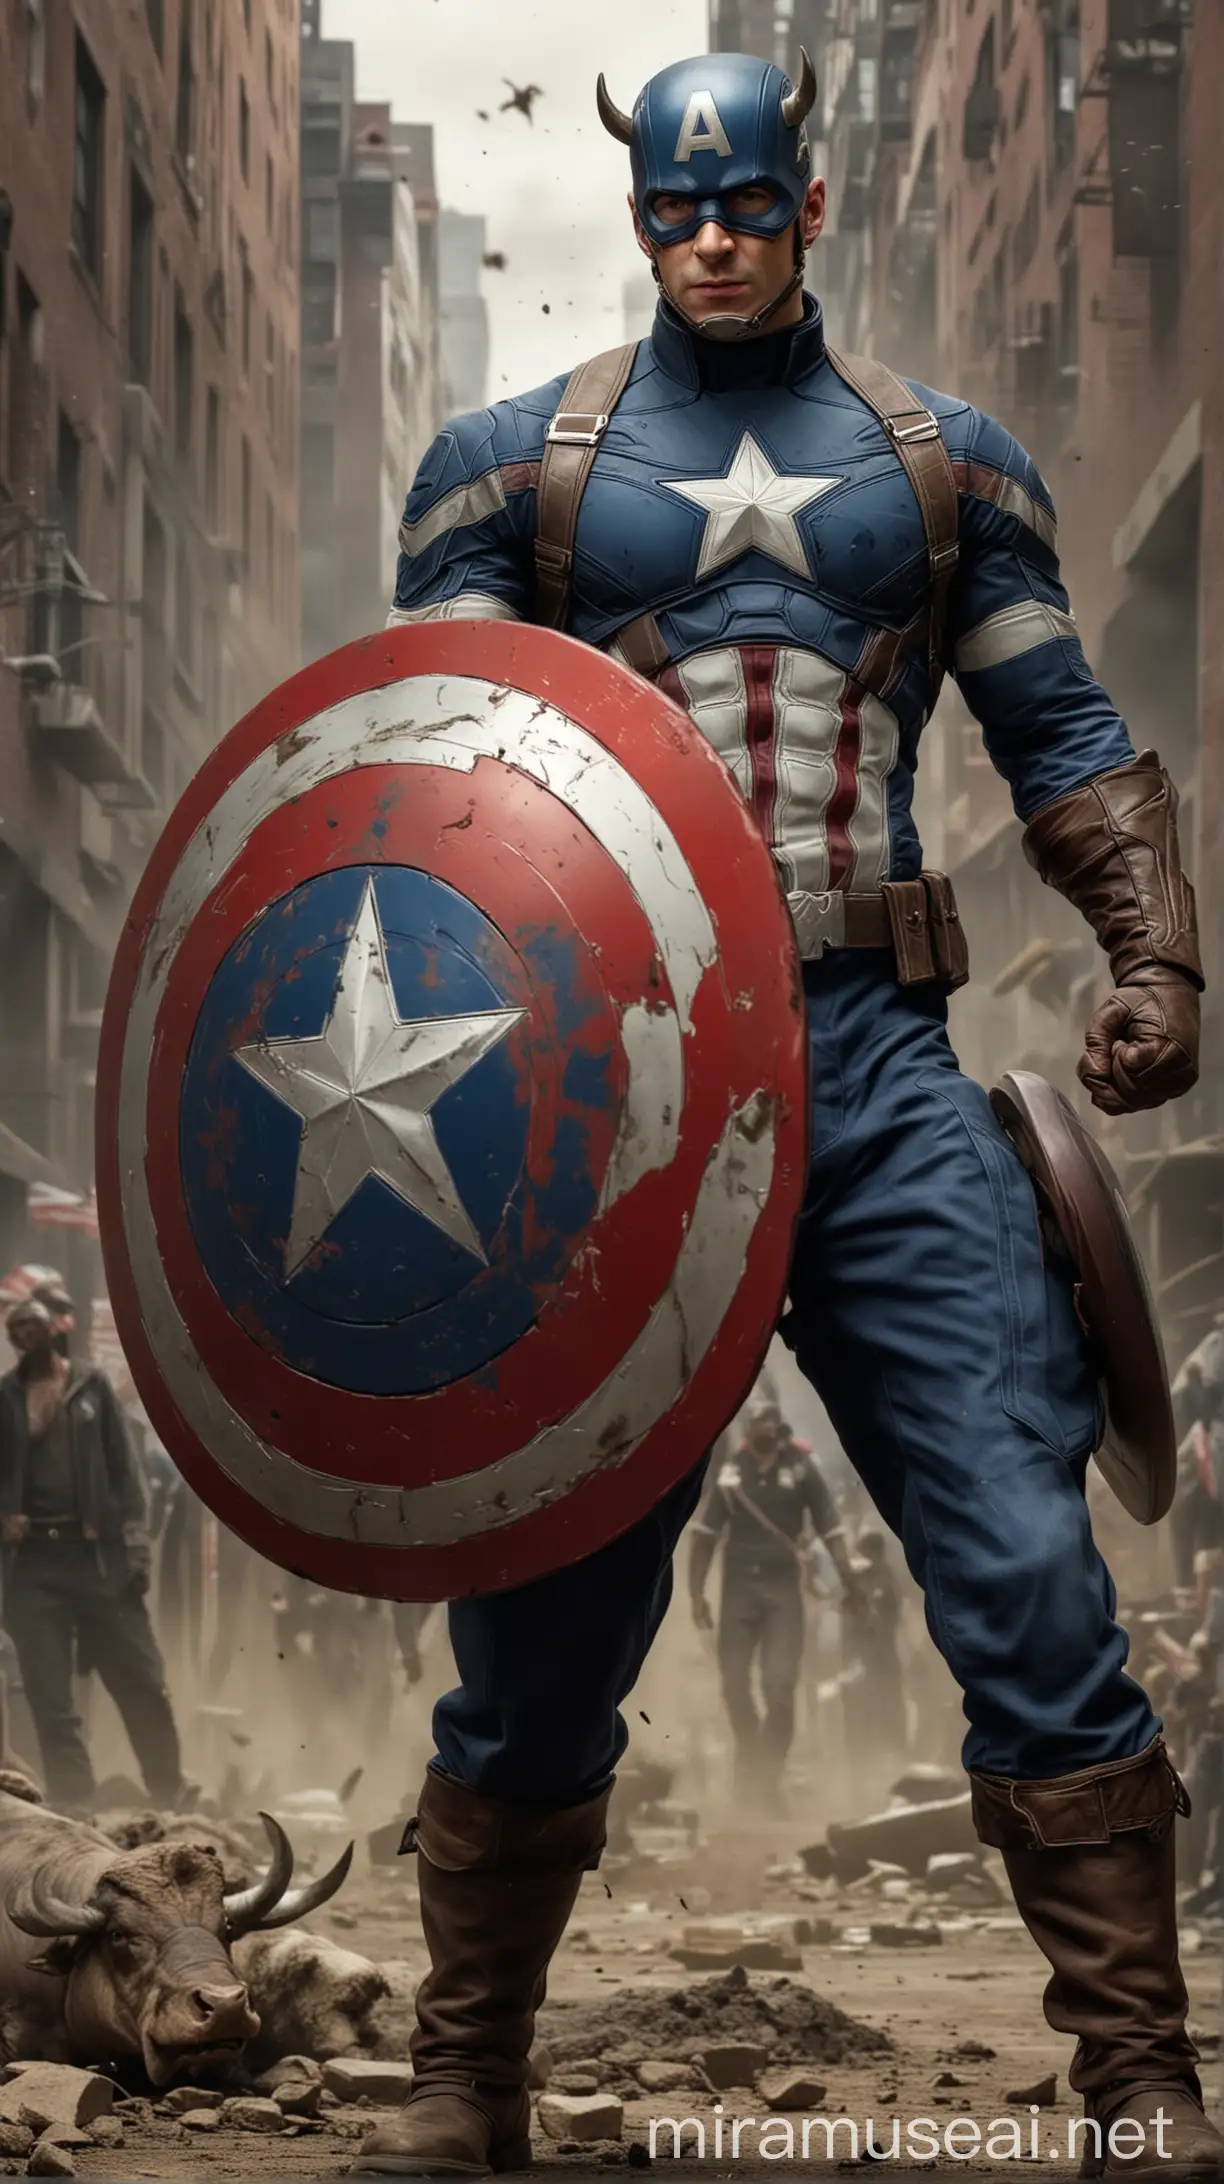 Captain America is like a bull